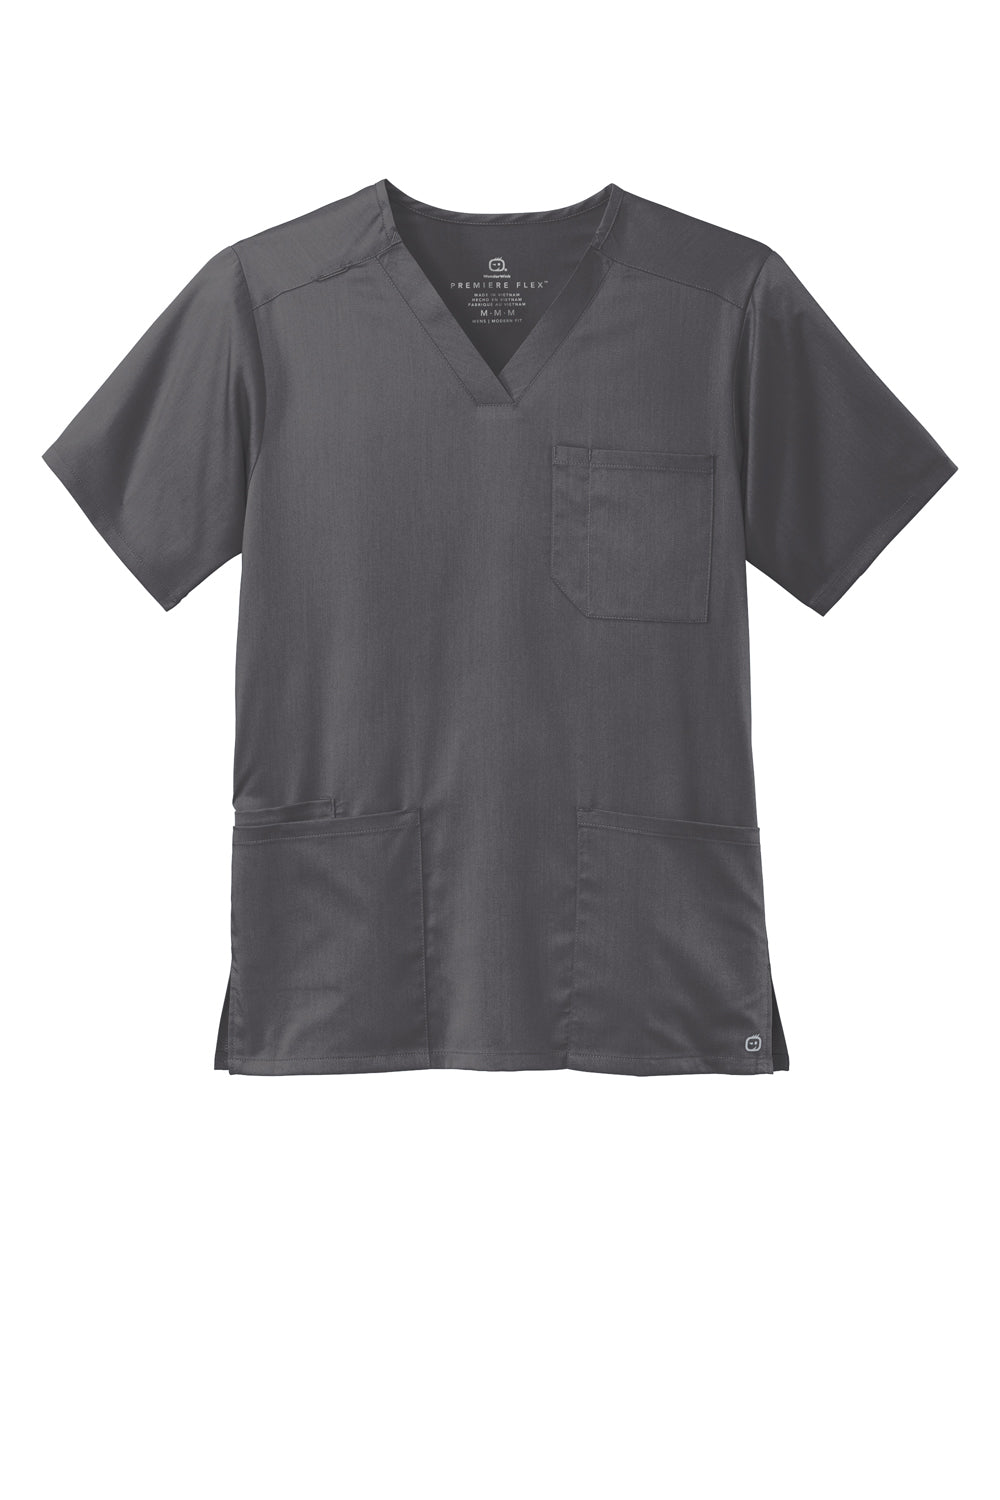 Wonderwink WW5068 Premiere Flex Short Sleeve V-Neck Shirt Pewter Grey Flat Front